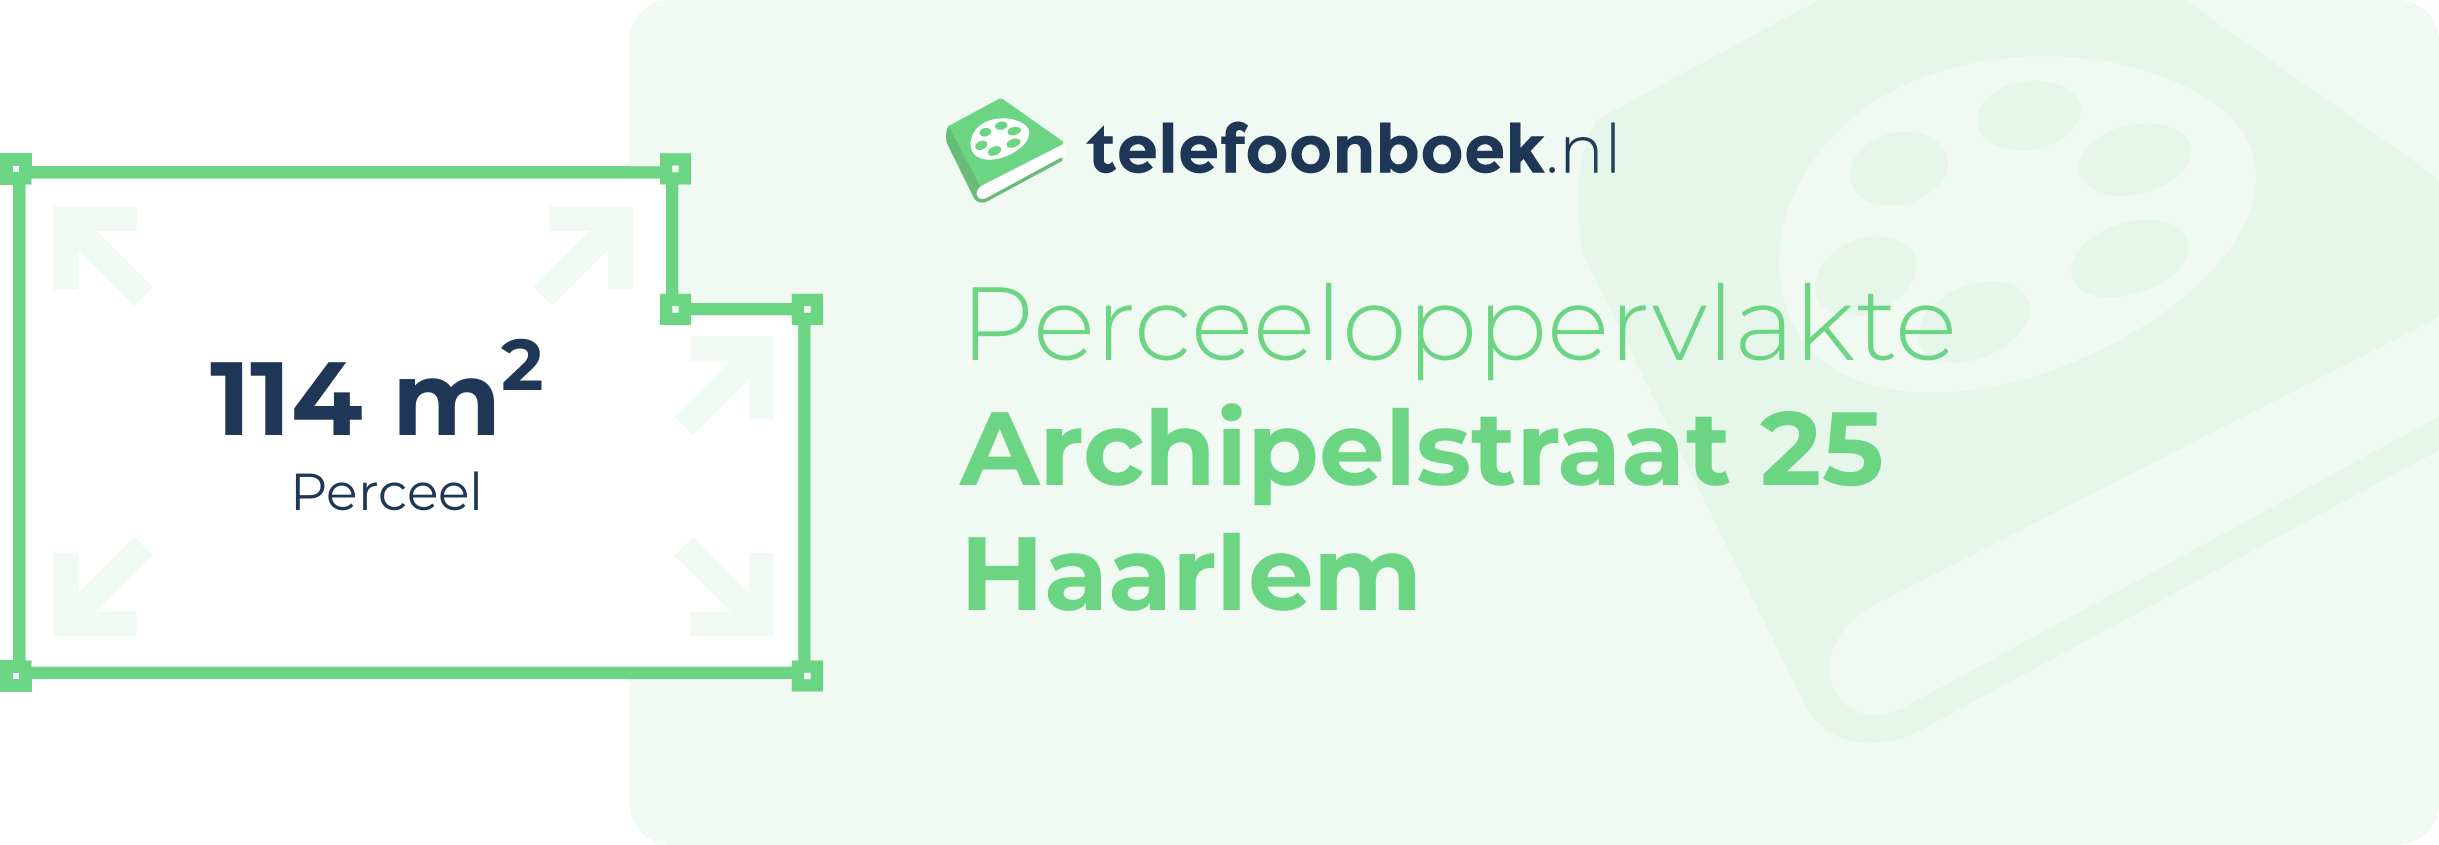 Perceeloppervlakte Archipelstraat 25 Haarlem